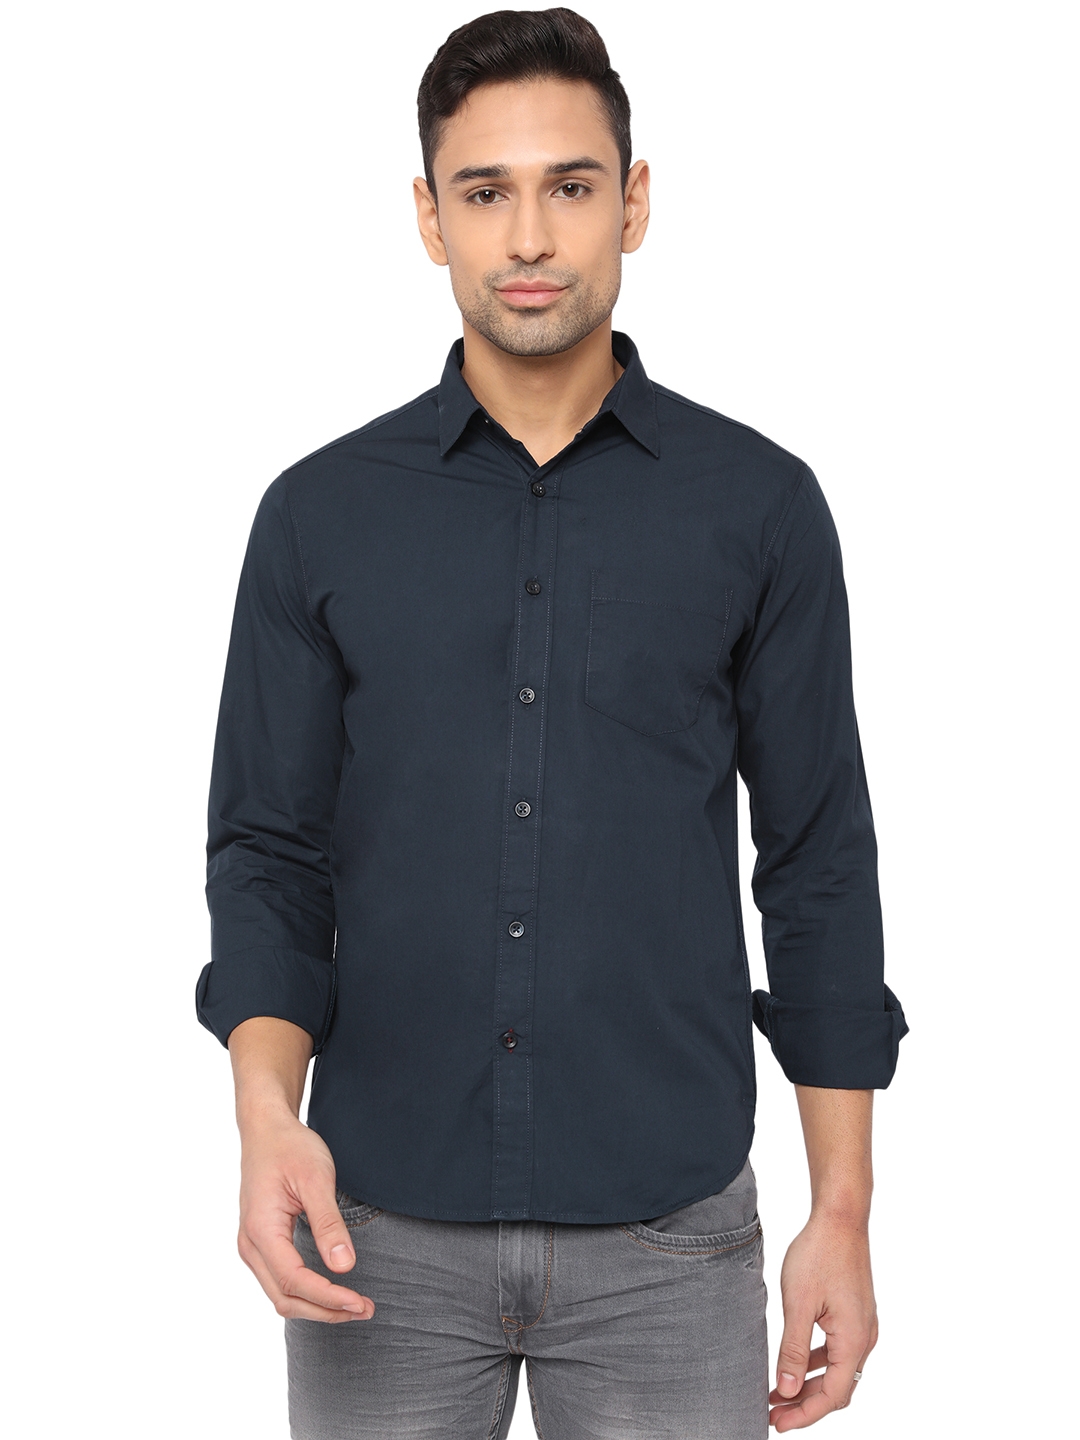 Greenfibre | Dress Blue Solid Slim Fit Semi Casual Shirt | Greenfibre 0